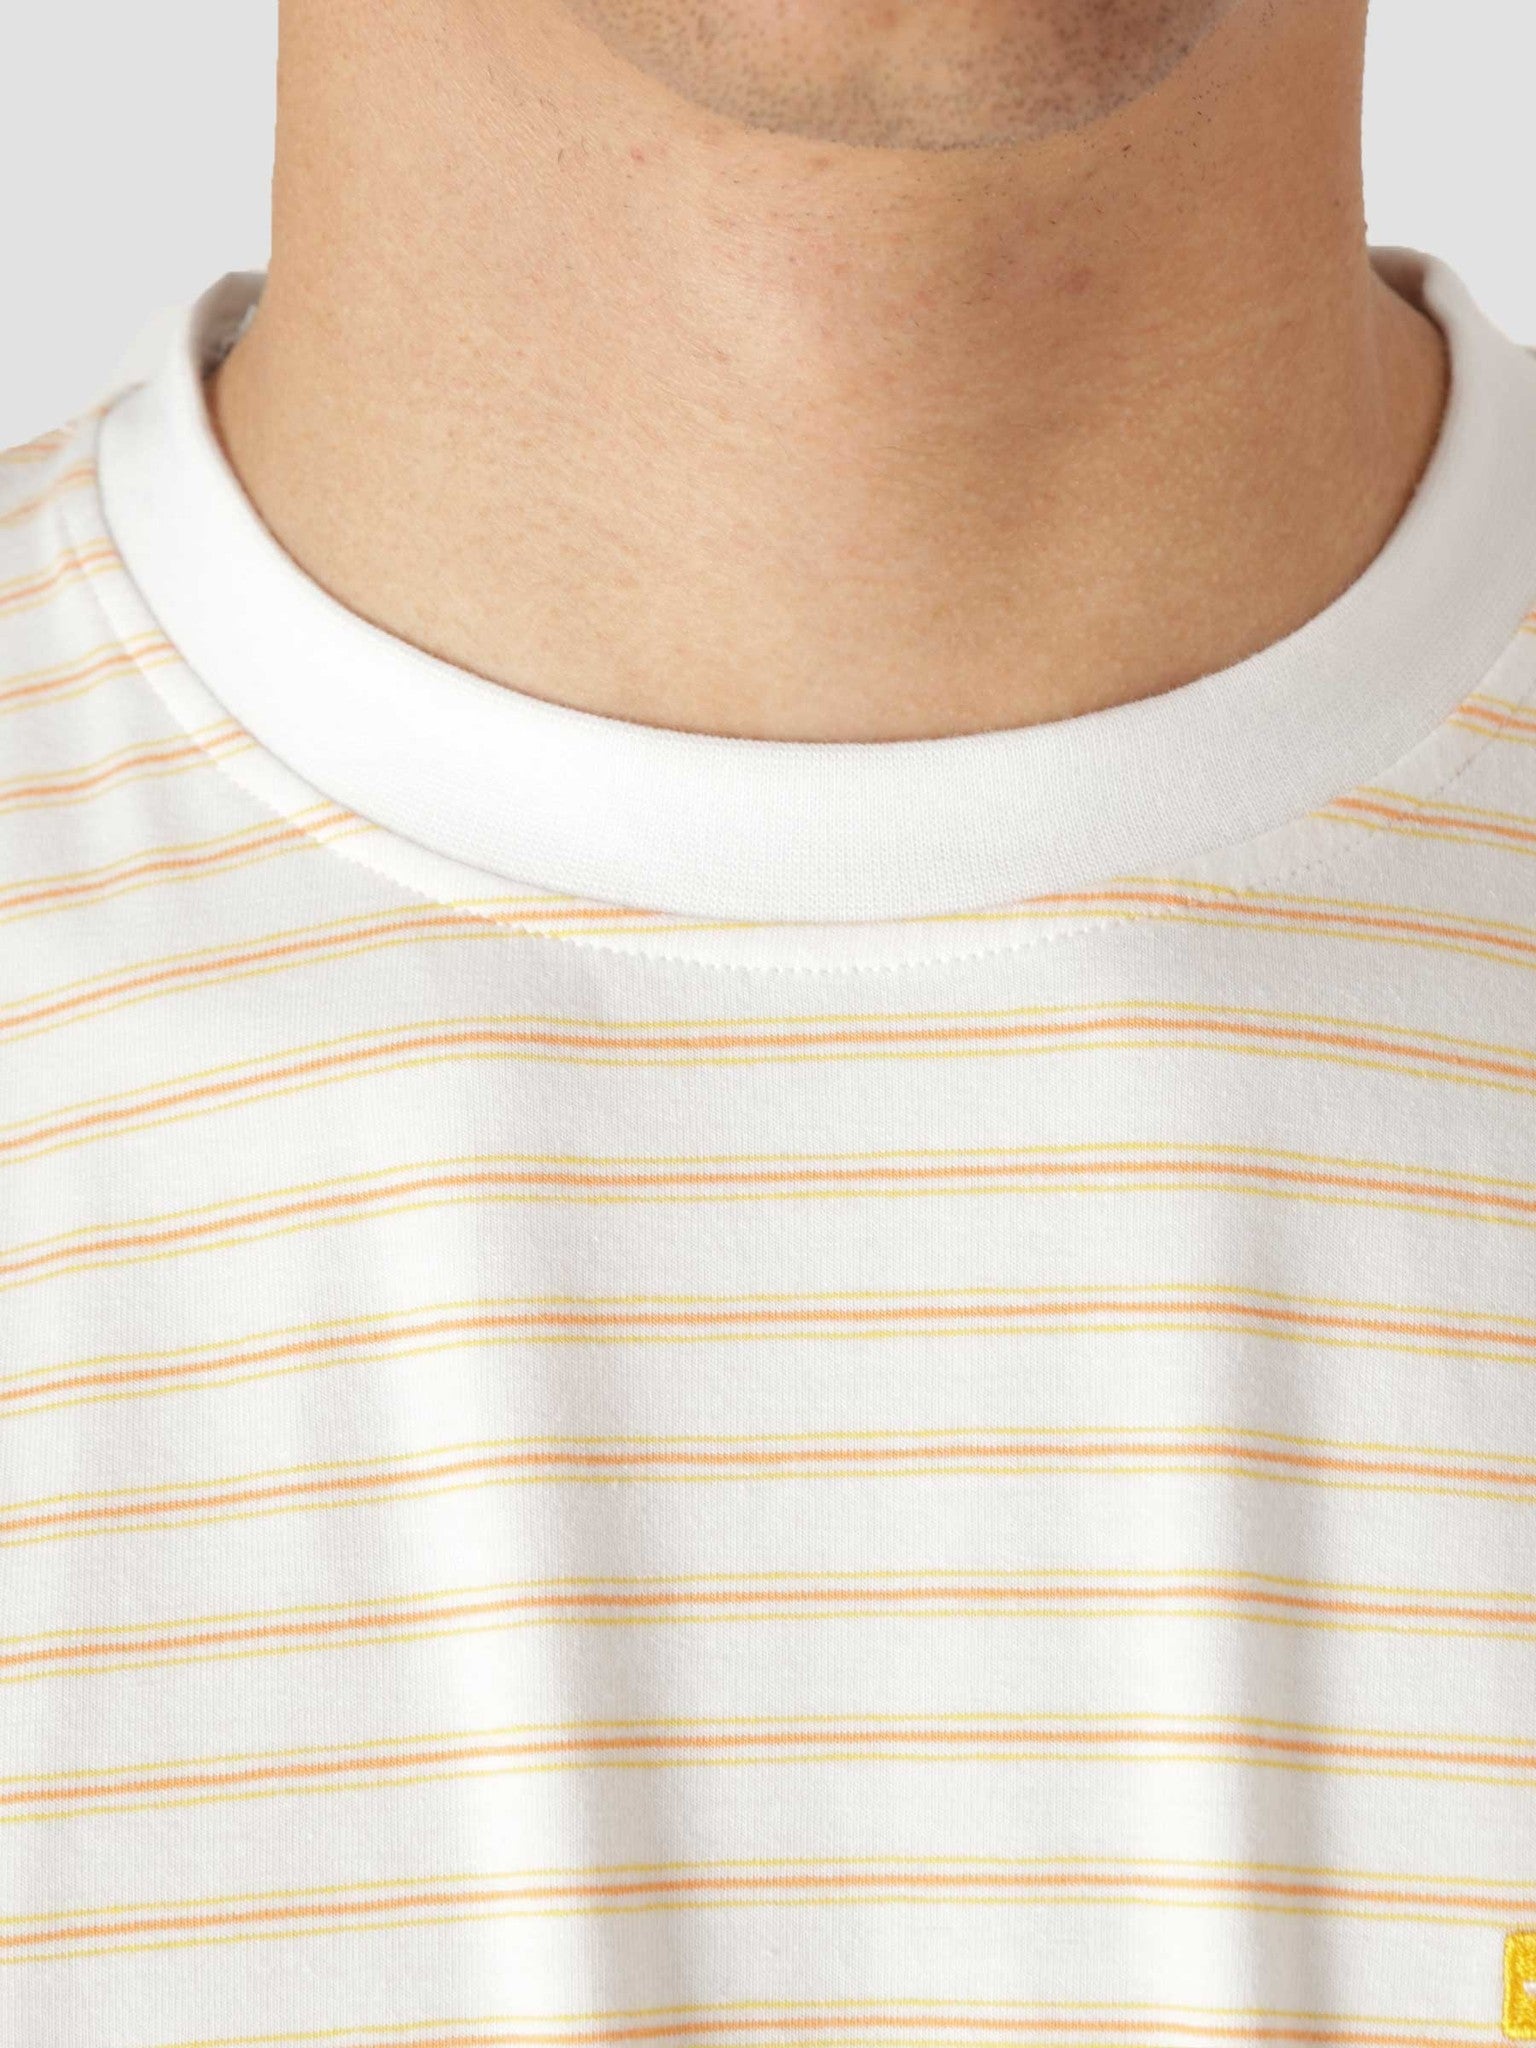 QB601 Stripe T-shirt White Orange Yellow